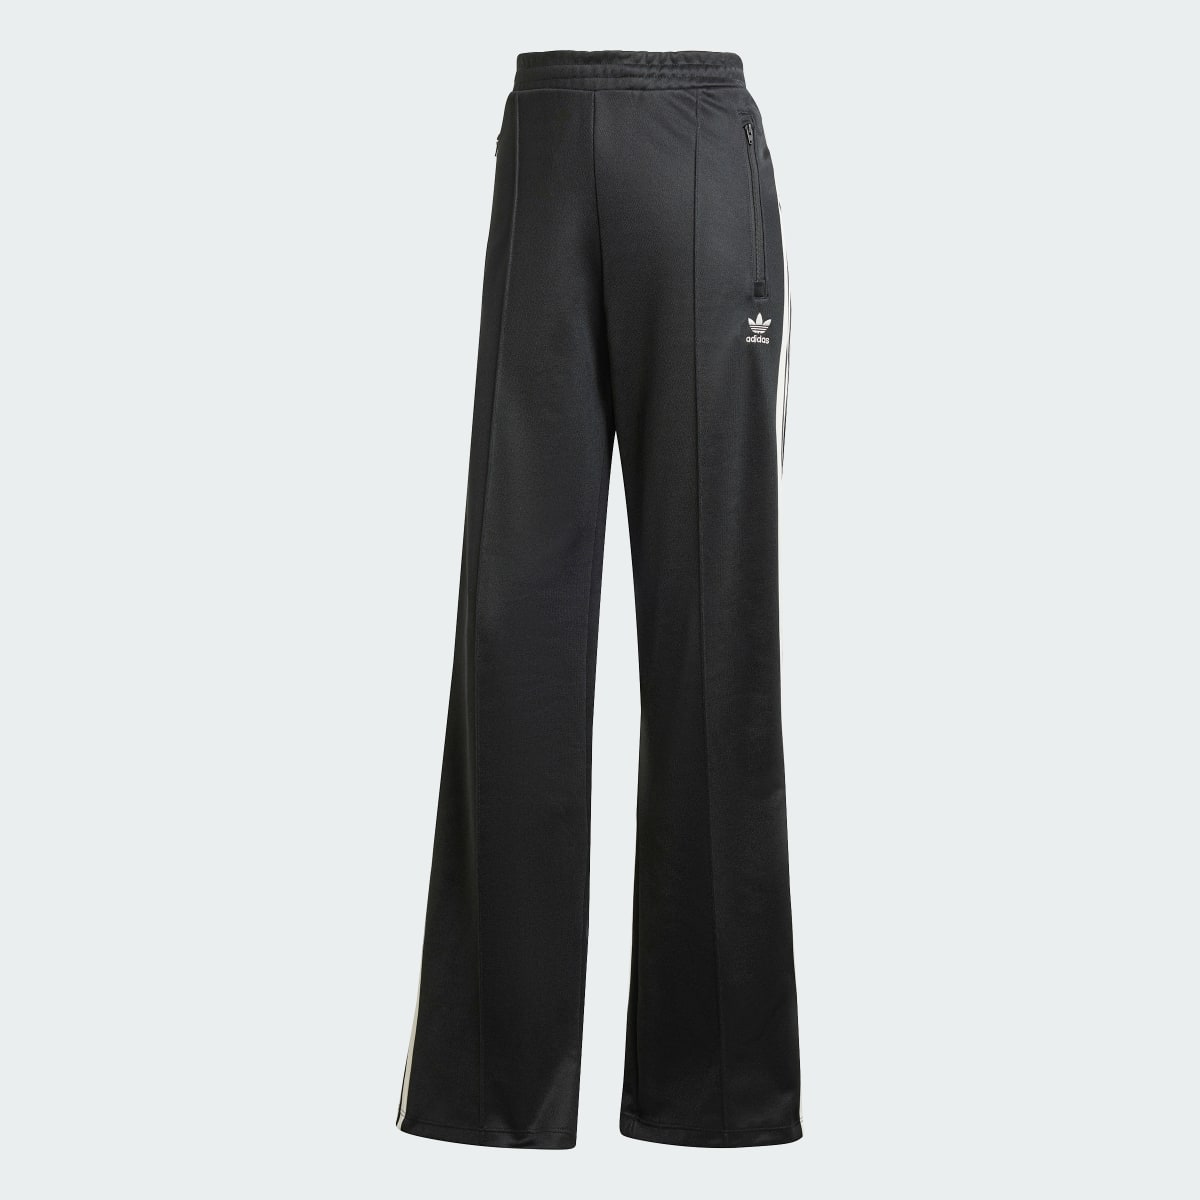 Adidas Pantalon de survêtement Beckenbauer. 4